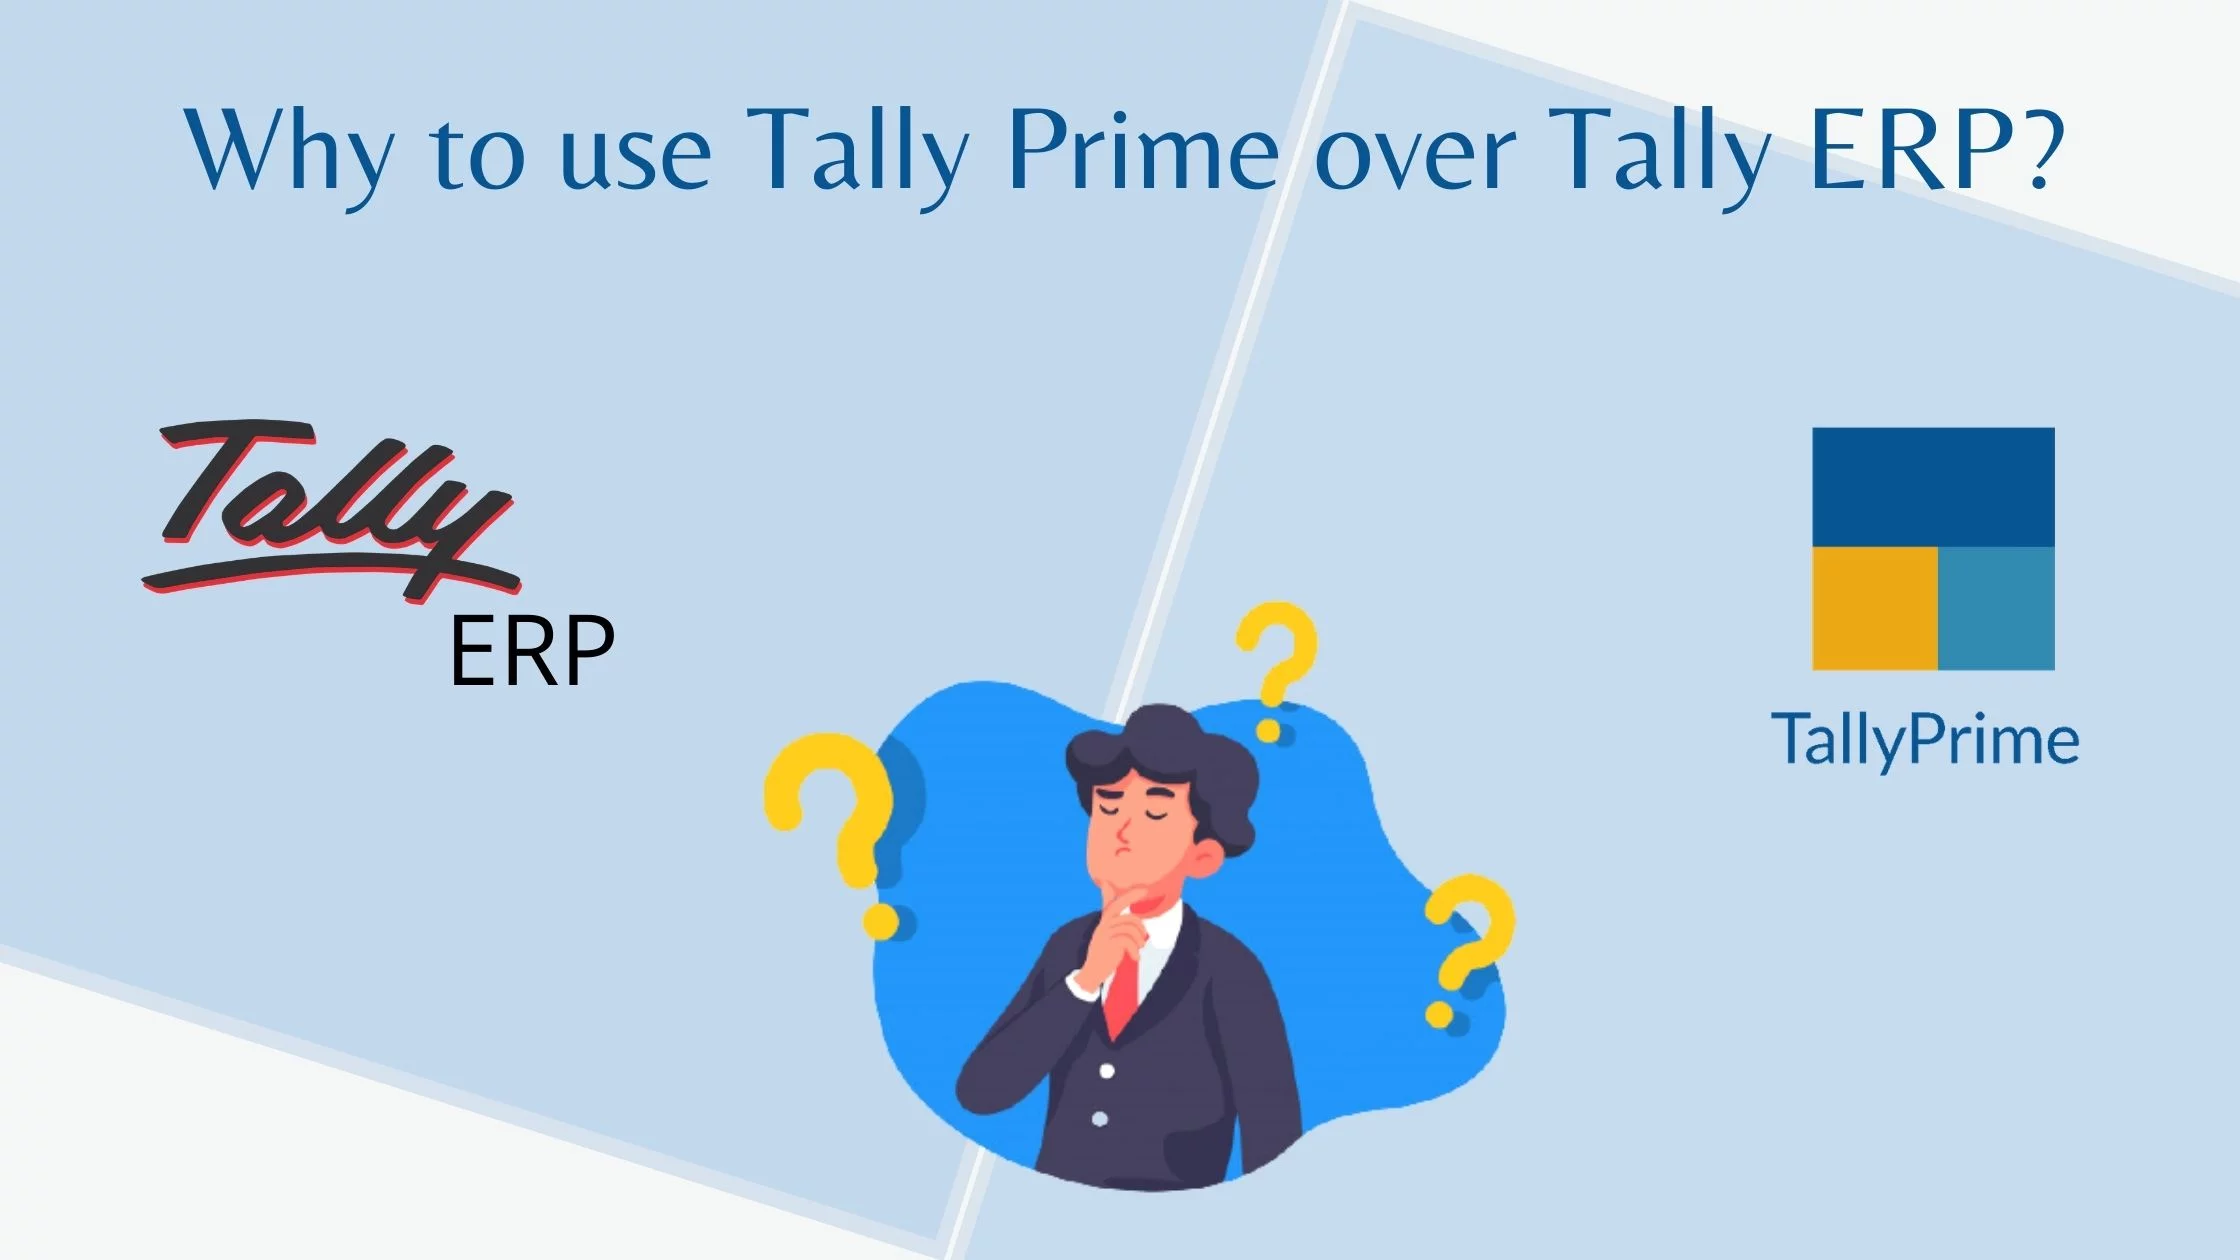 Tally Prime vs Tally erp